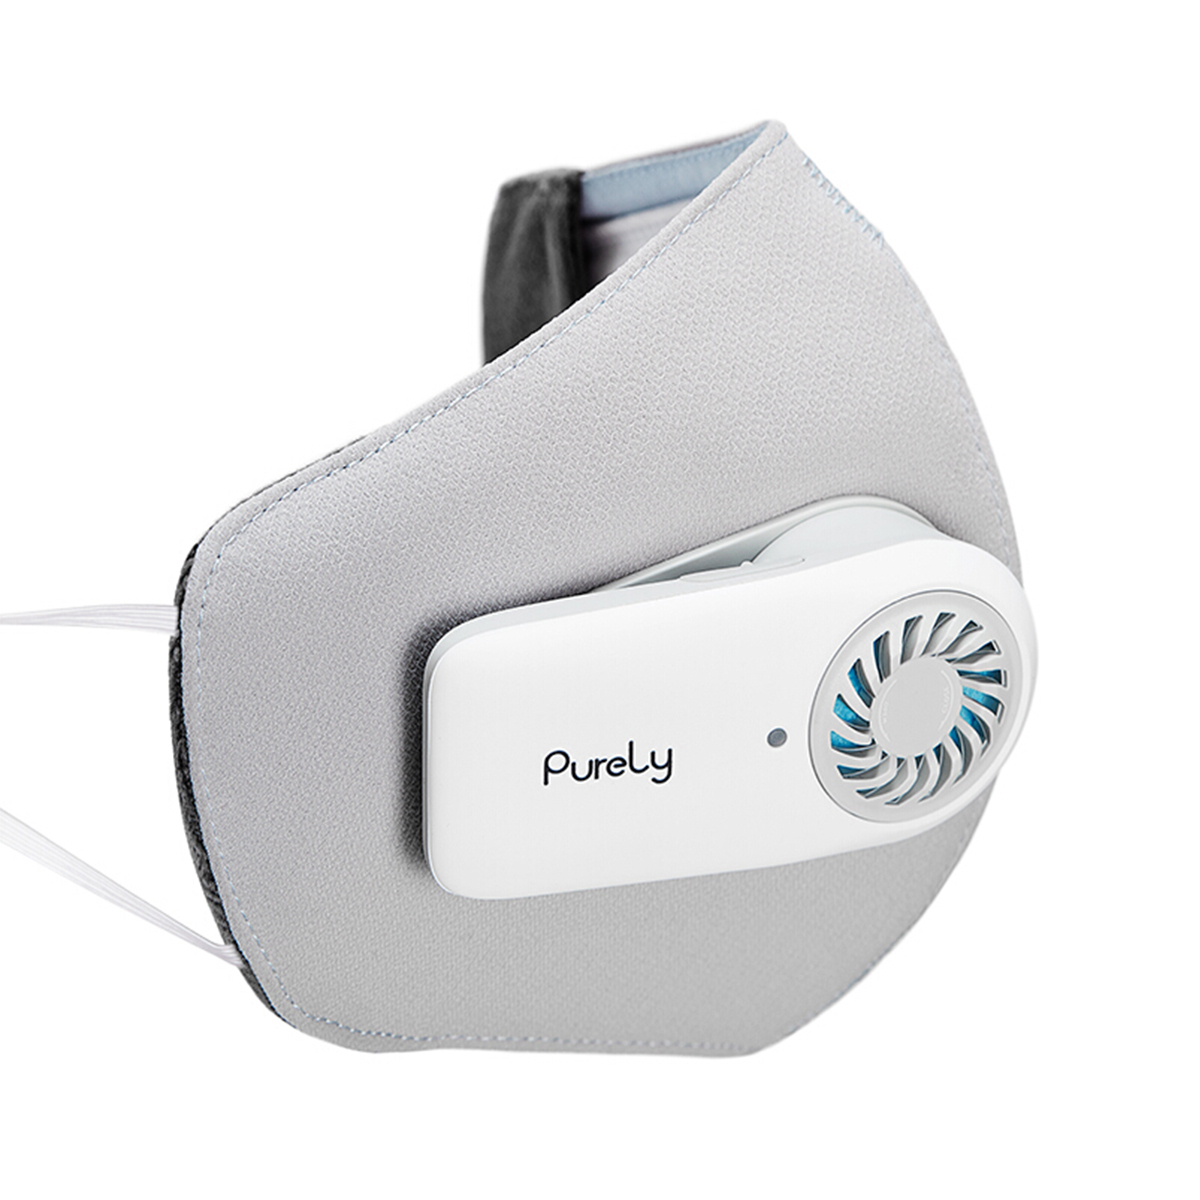 

Purely Intelligent New Air Анти Dust Face Маска Анти-Респиратор от загрязнения PM2.5 Фильтр-очиститель с вентилятором